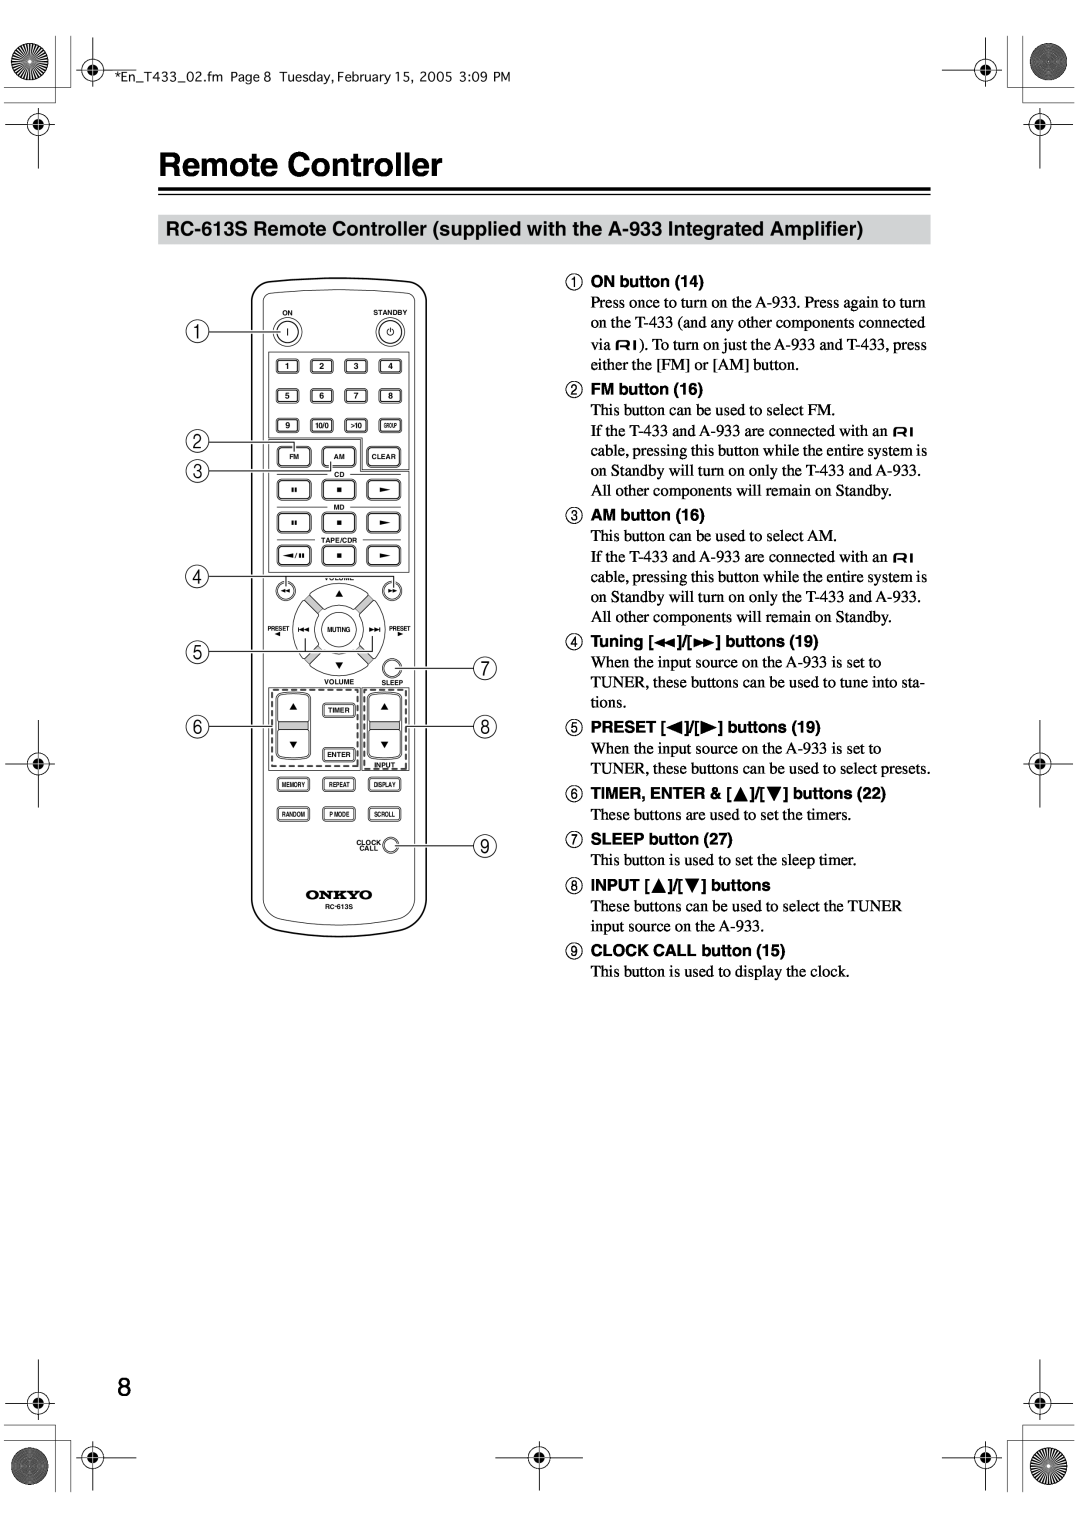 Onkyo T-433 Remote Controller, AON button, BFM button, CAM button, D Tuning / buttons, EPRESET / buttons, GSLEEP button 